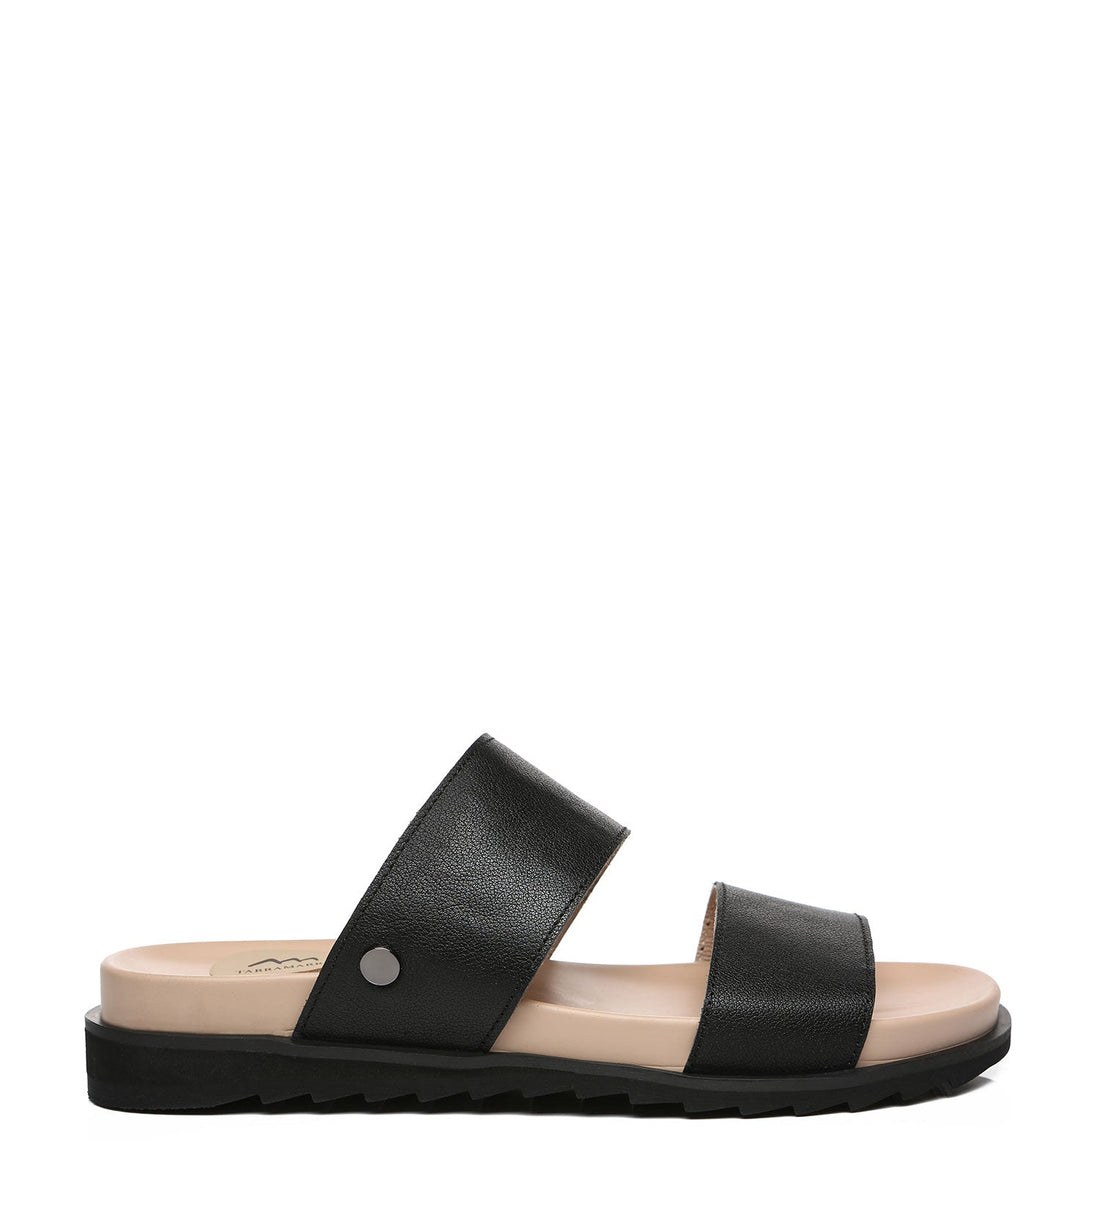 TARRAMARRA Double Strap Sandal Slides Women Savannah-Slides-PEROZ Accessories